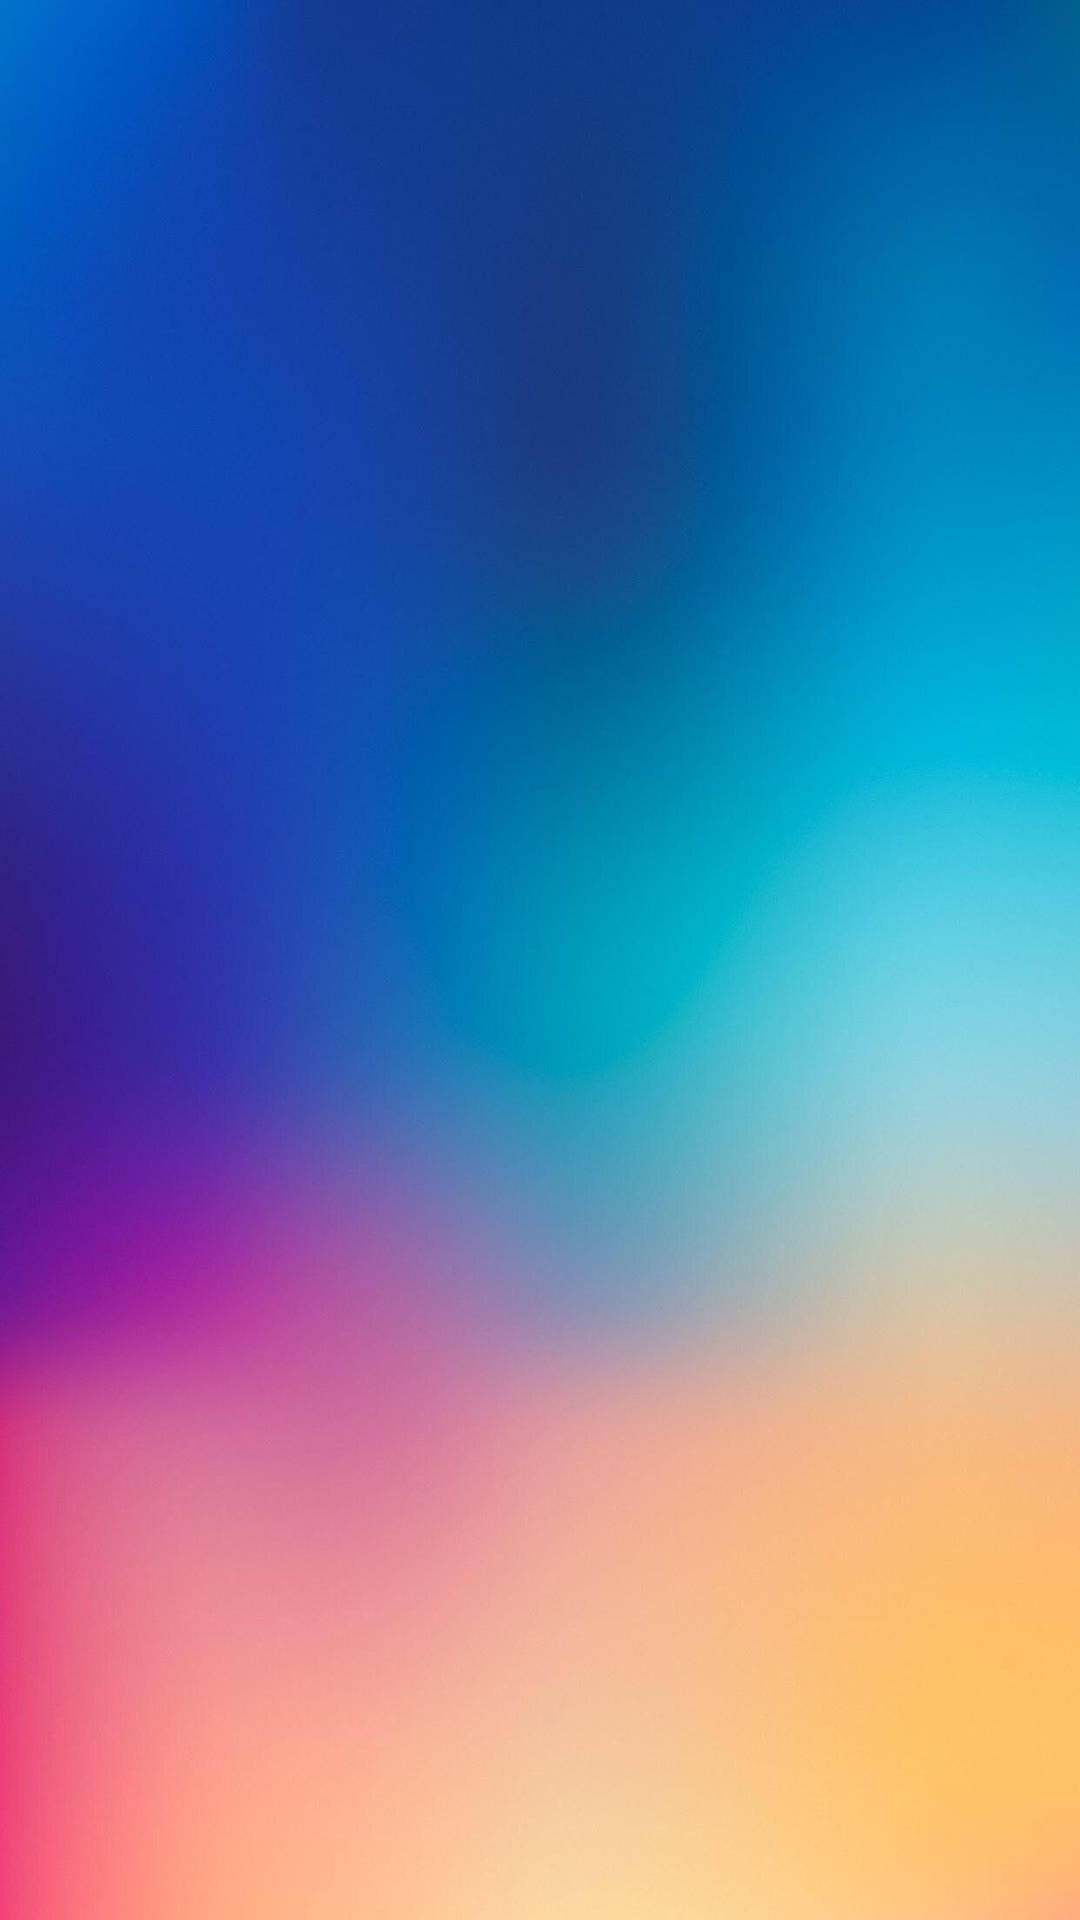 Plain Blue Orange Blur Gradient Iphone